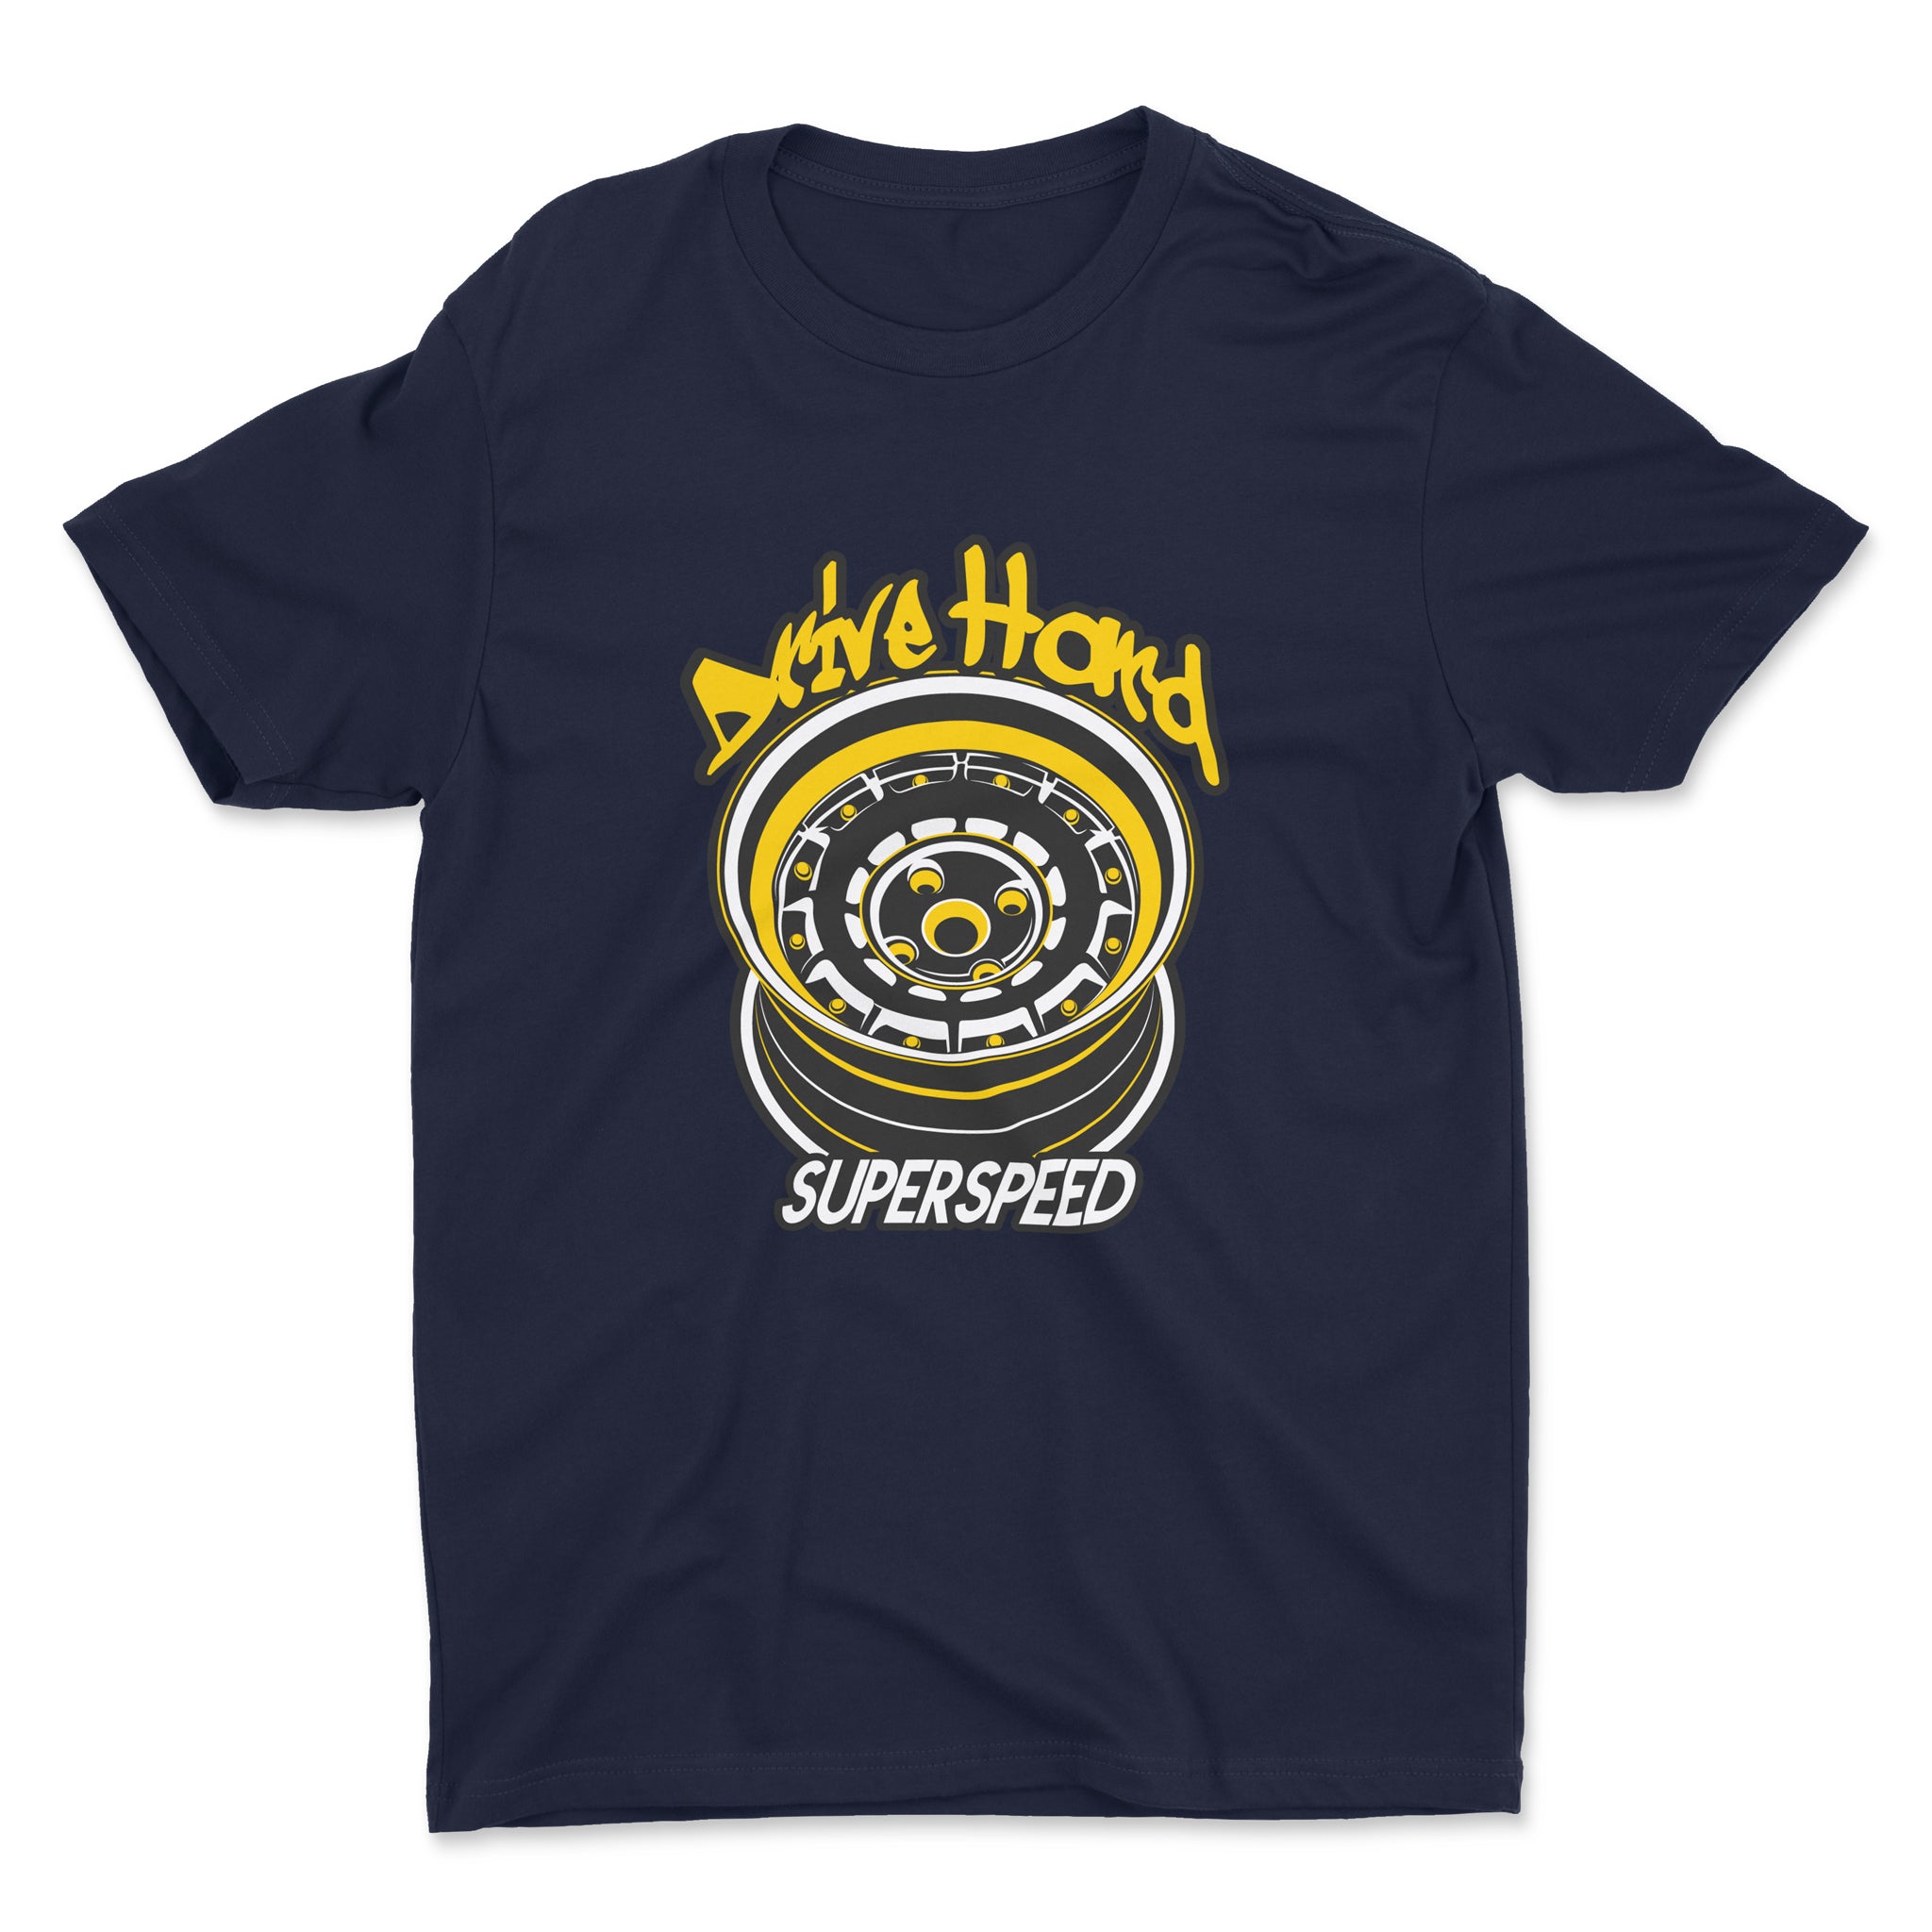 Drive Hard Super Speed - Car T-Shirt - Navy.